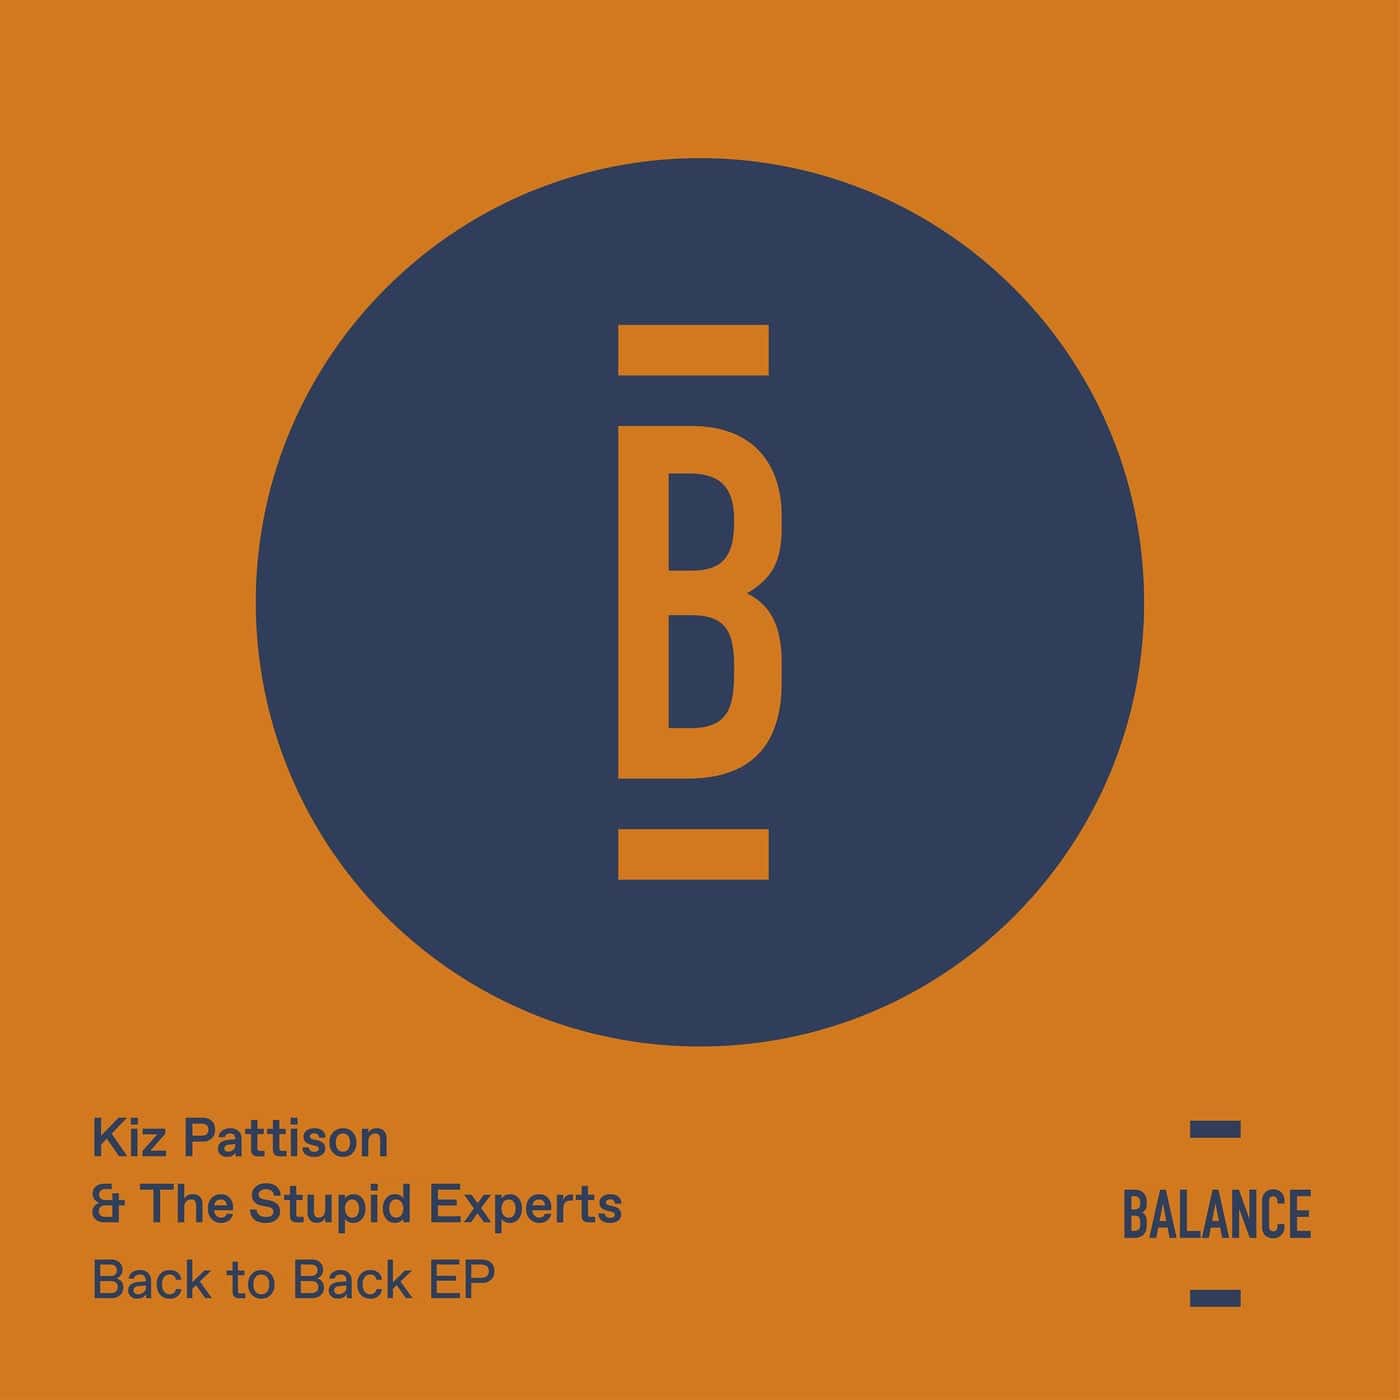 image cover: Kiz Pattison, The Stupid Experts, Kiki Cave - Back to Back / BALANCE027EP